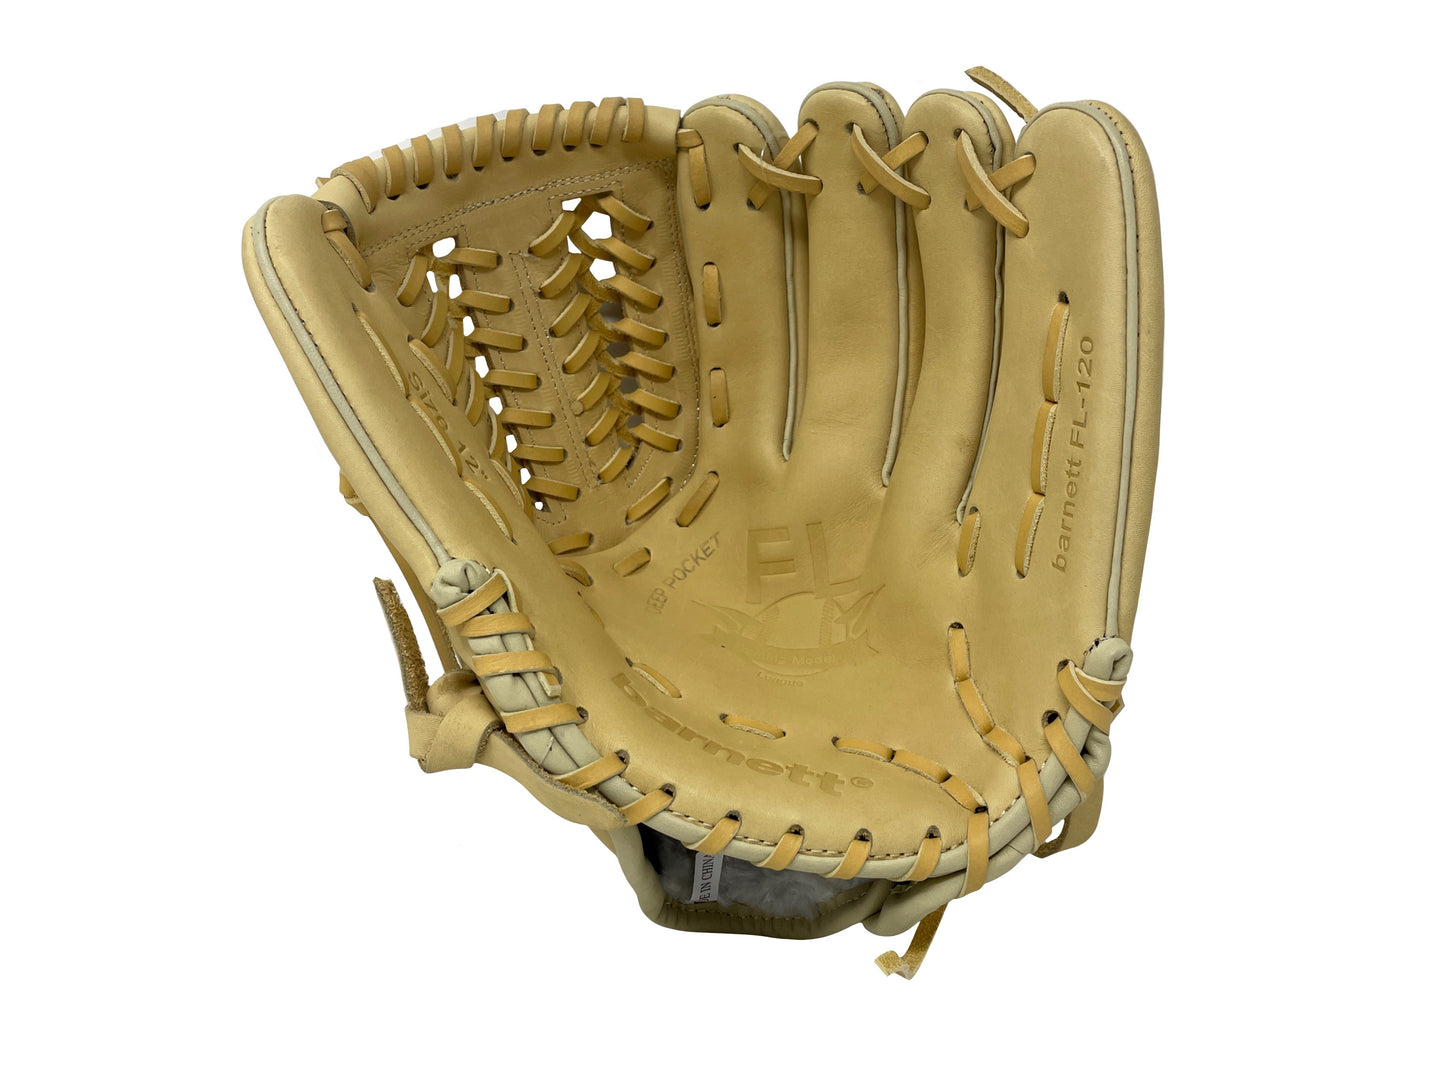 FL-120 Baseballhandschuh aus hochwertigem Leder Infield / Outfield / Pitcher 12 , Beige